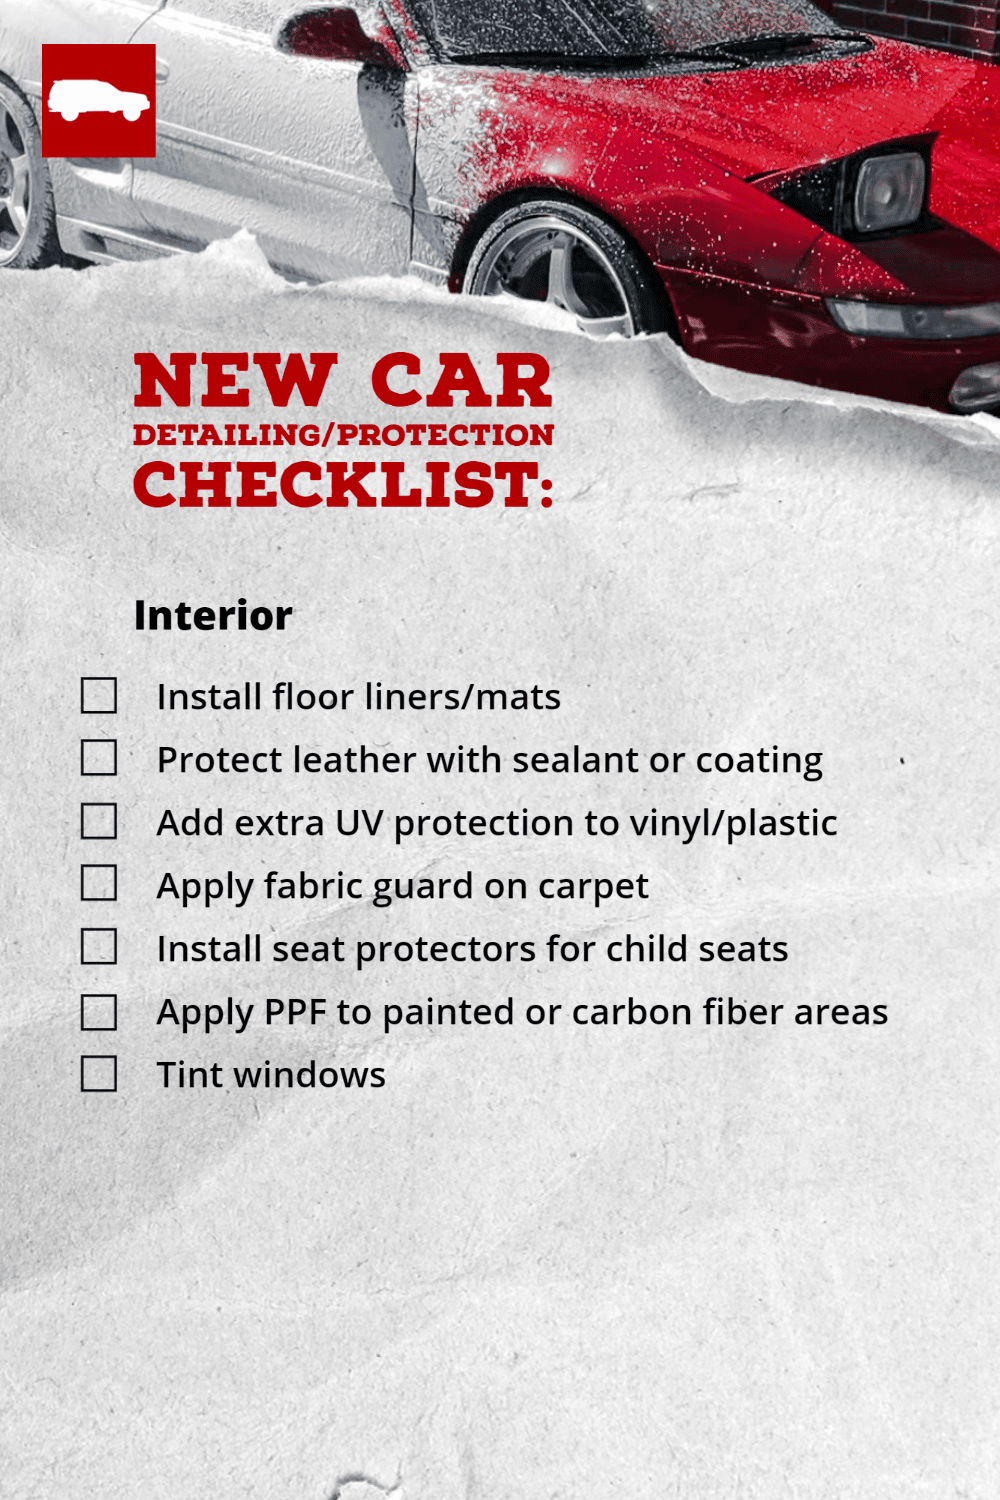 New car detailing checklist